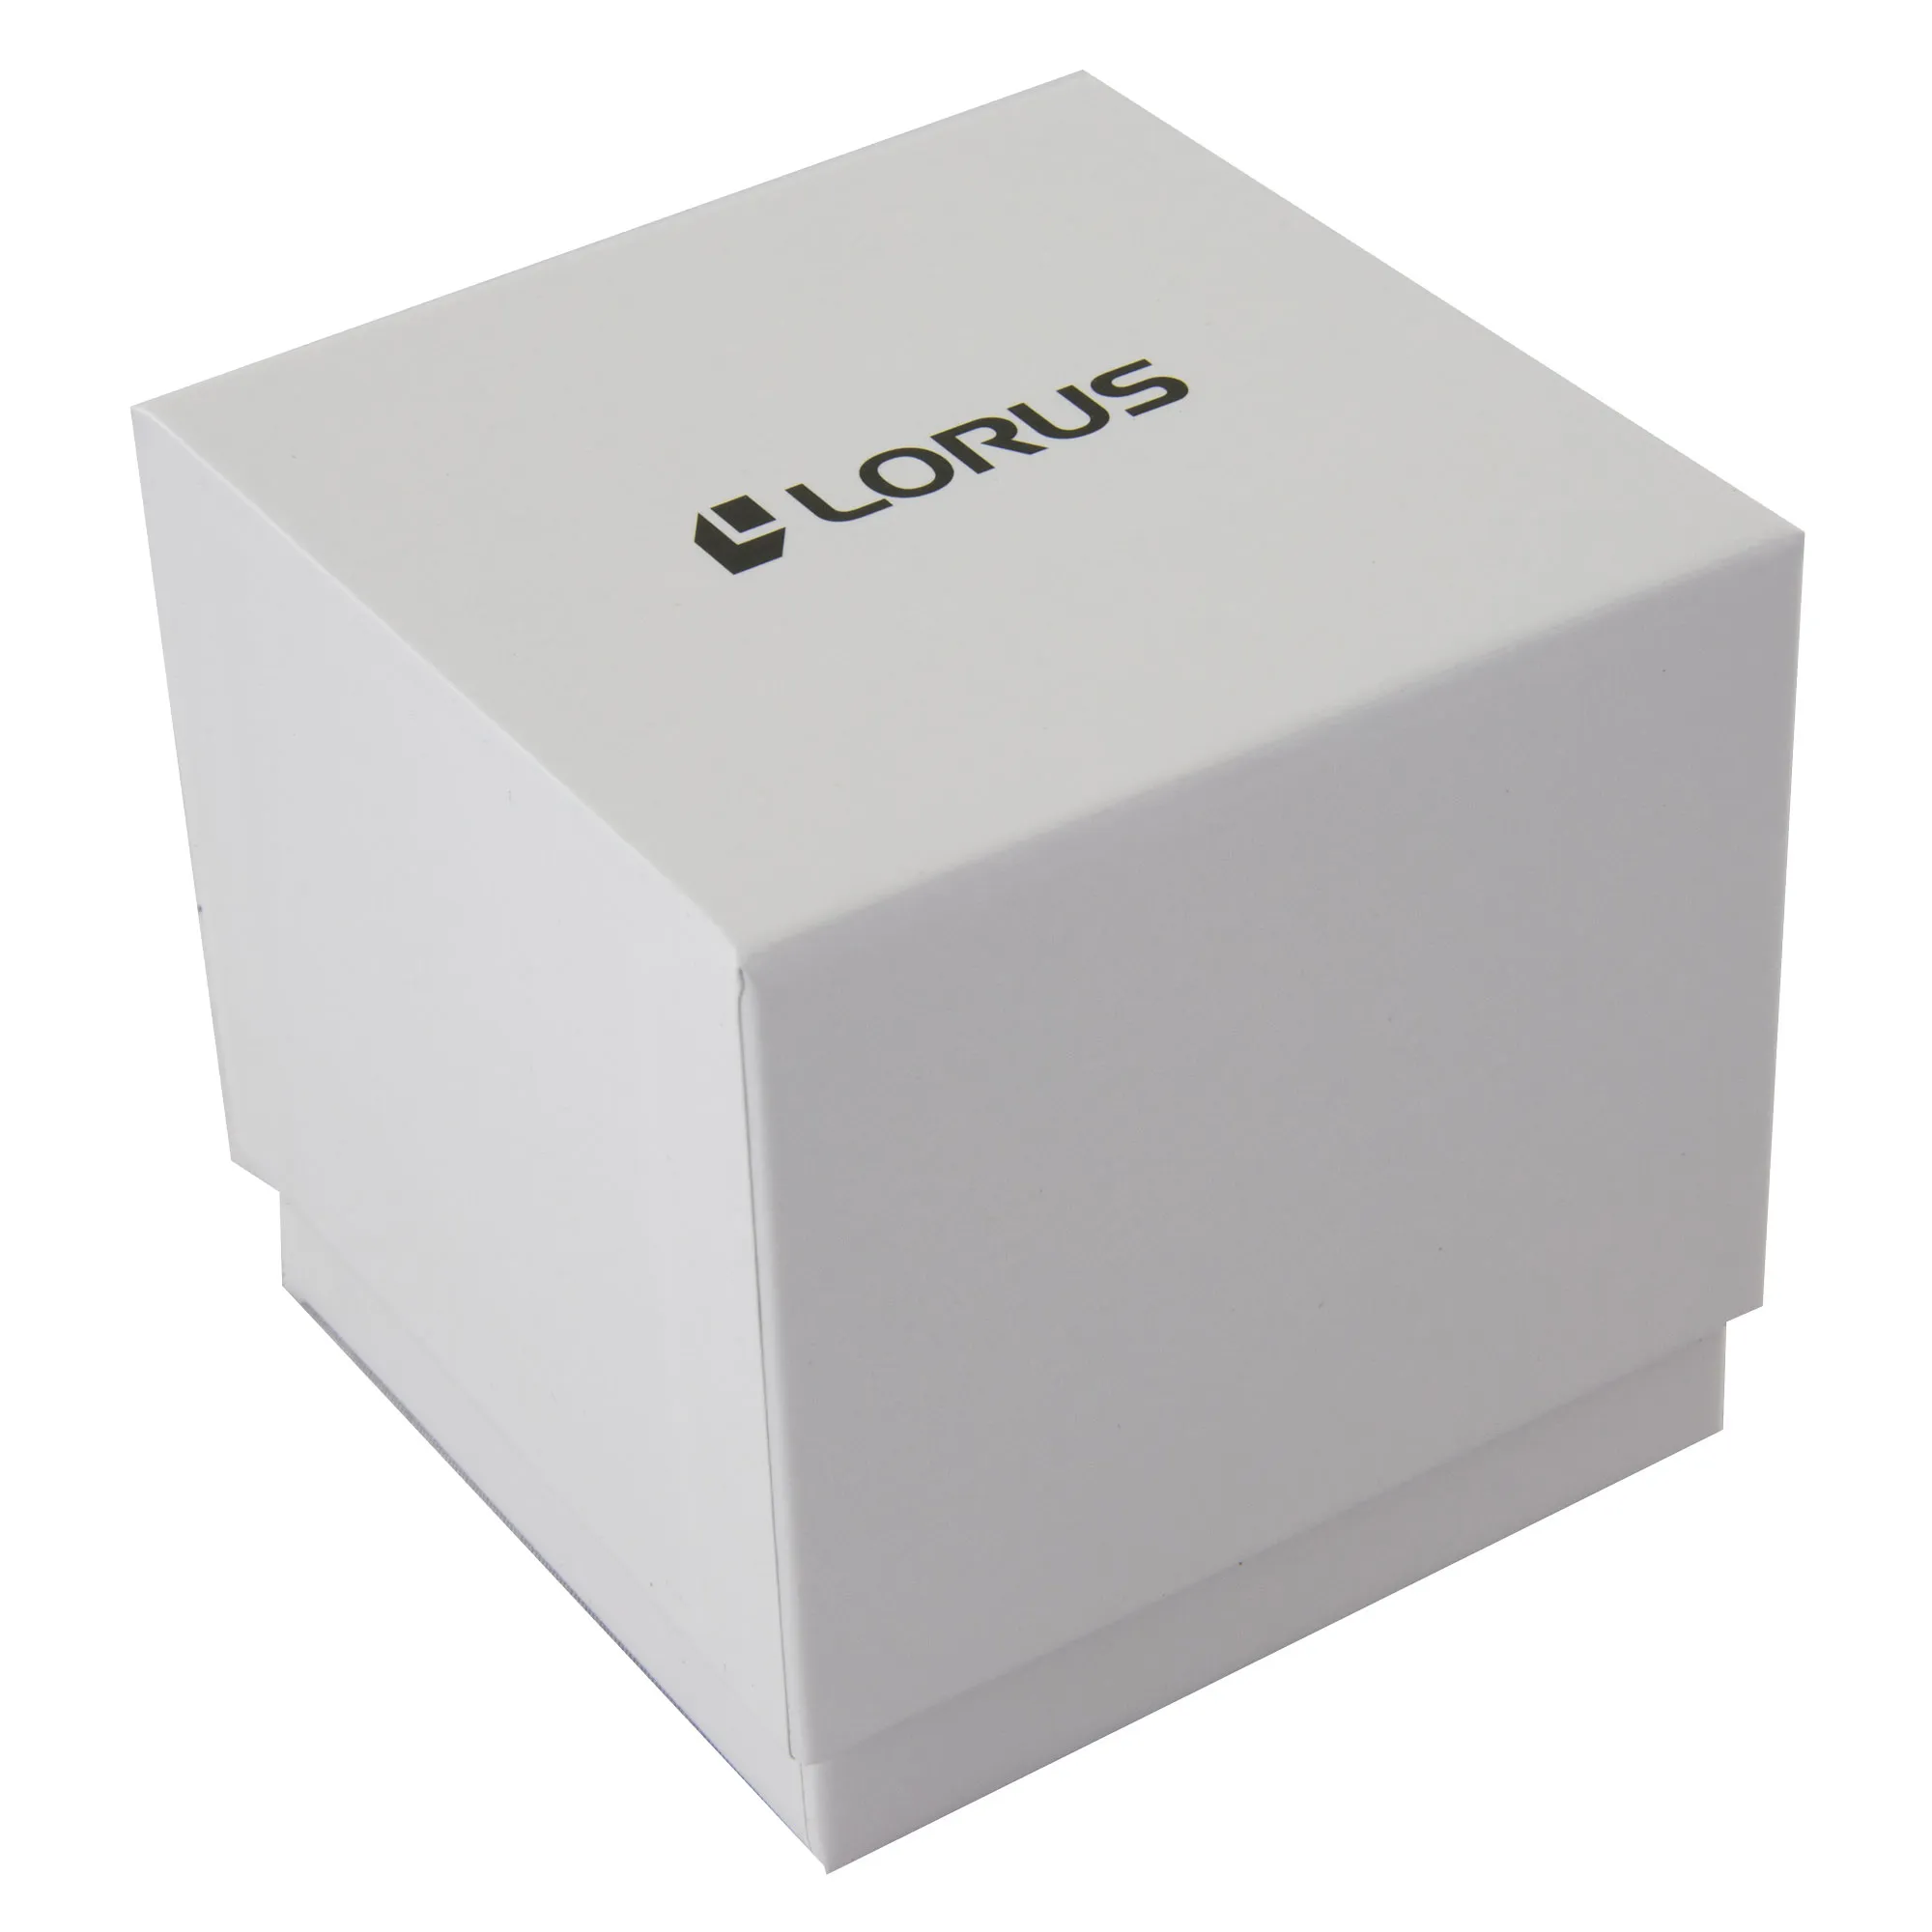 Lorus box